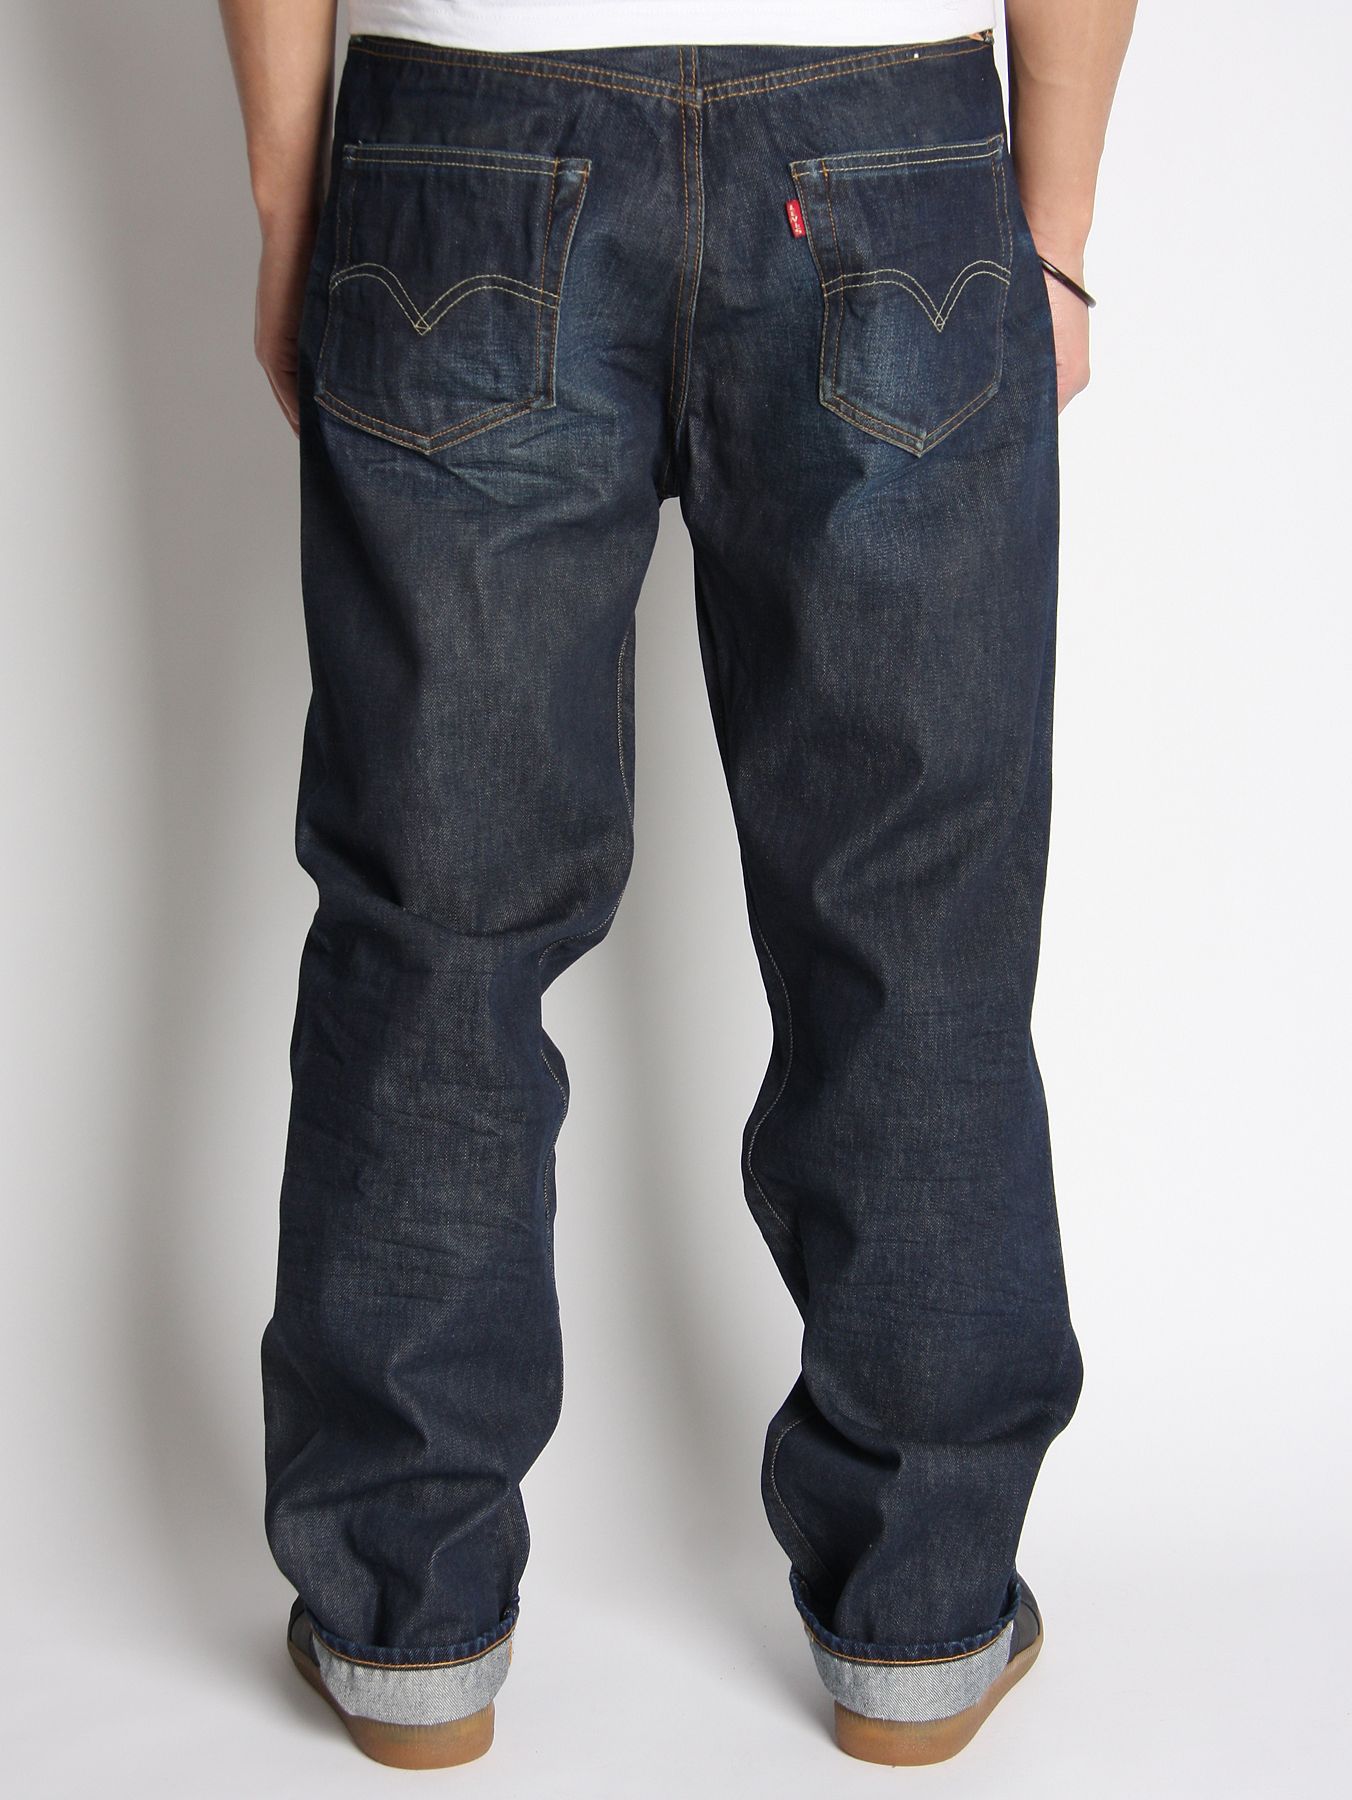 Levi's Levis Vintage Clothing Sugar Worn Rigid 501 Selvedge Jeans in ...